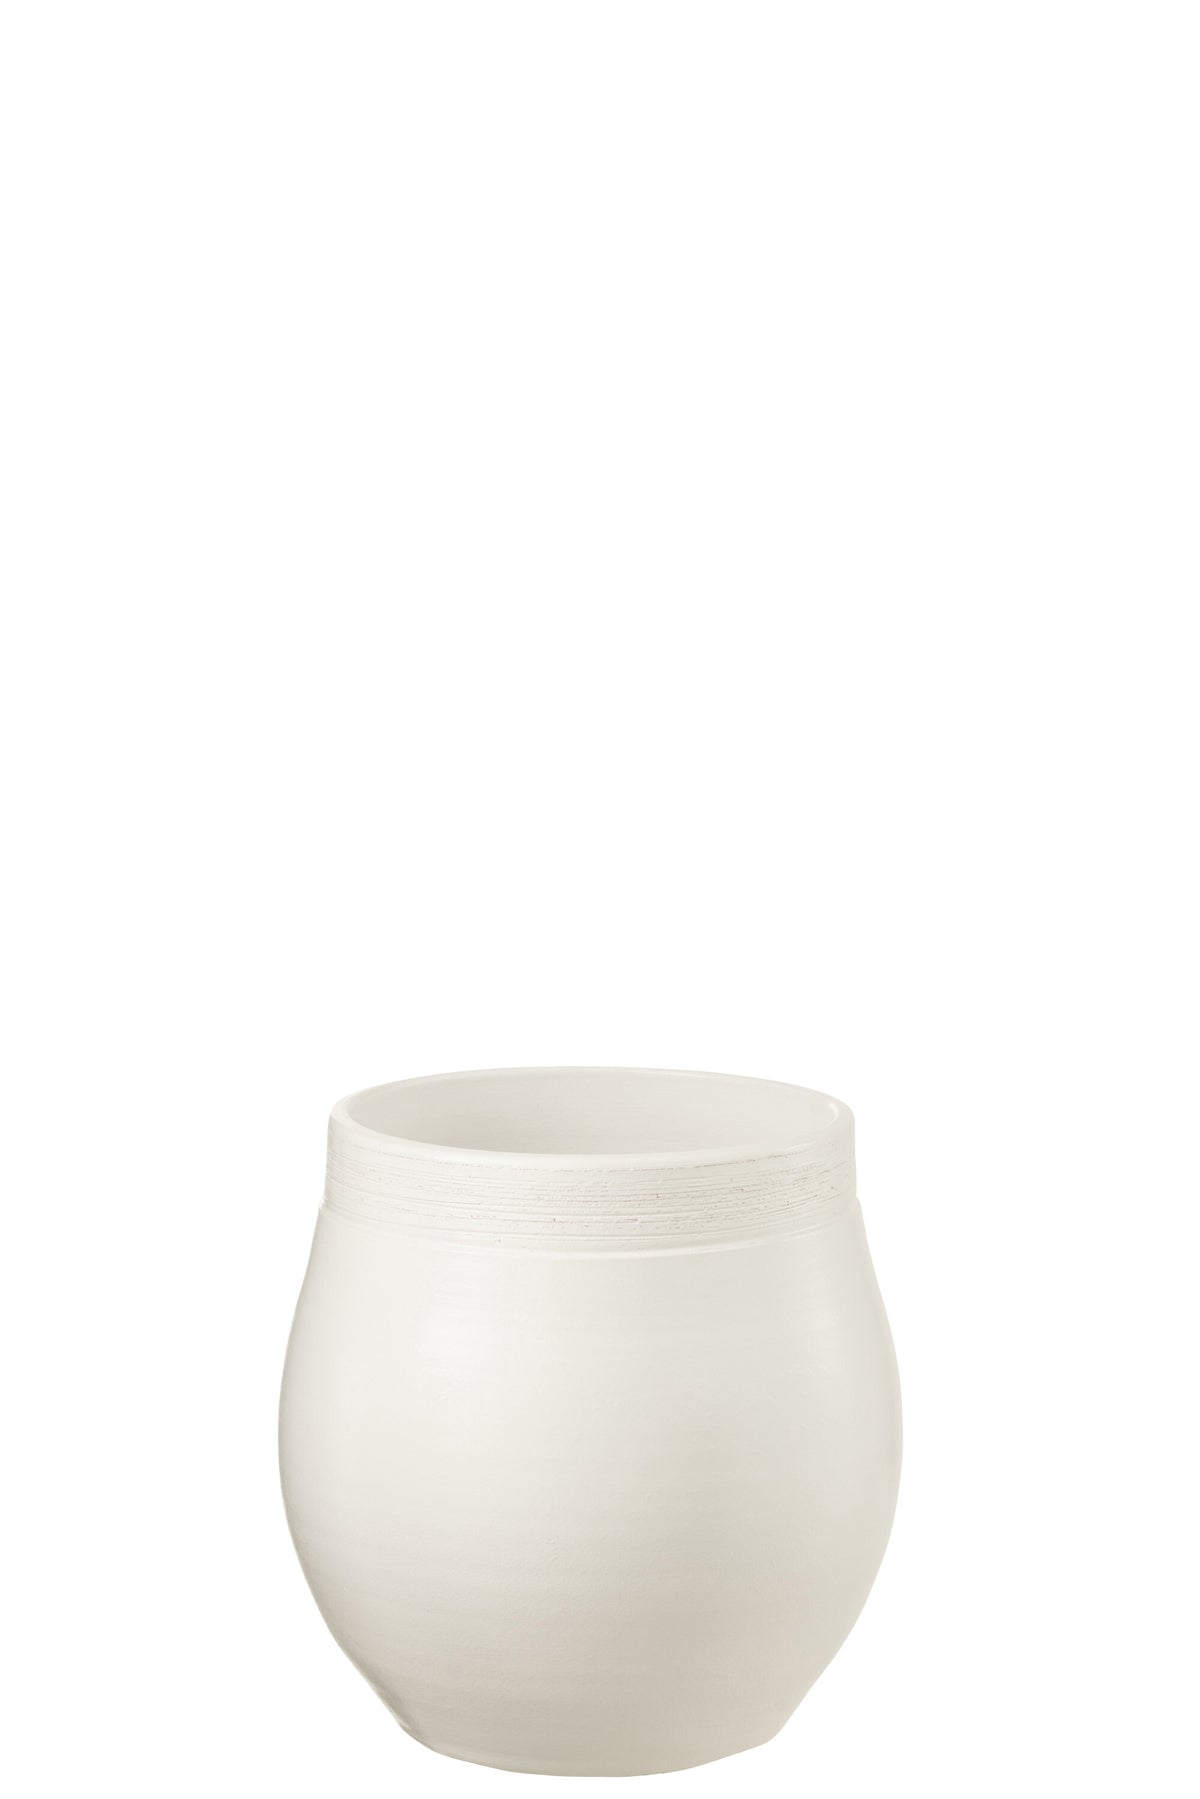 Flower Pot Gio White M - (34054)